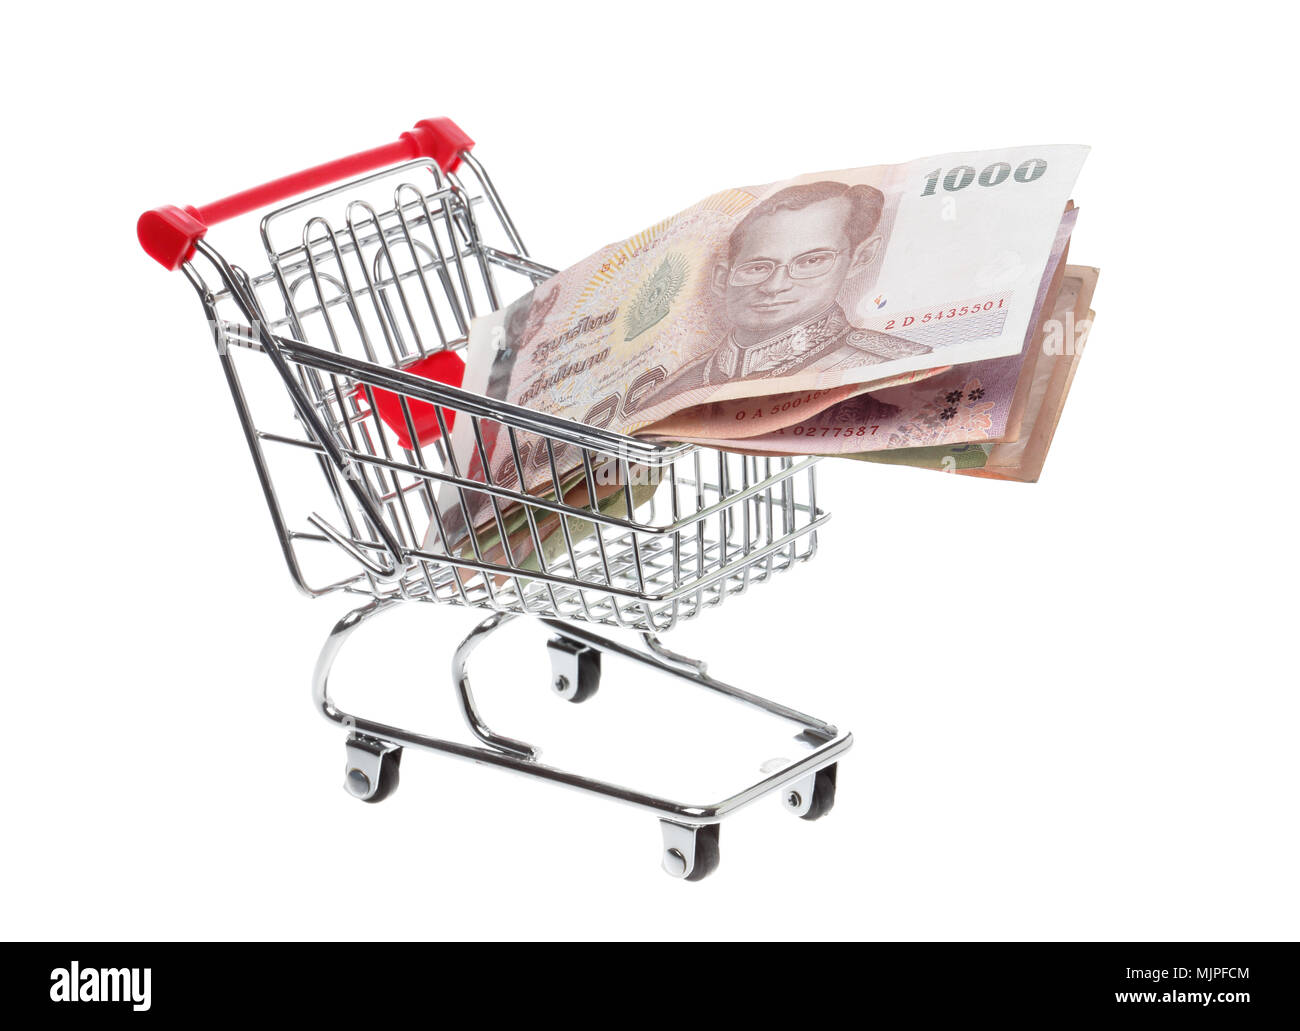 Shoppingcart filled with Tahi baht banknotes, isolatedon white. Stock Photo